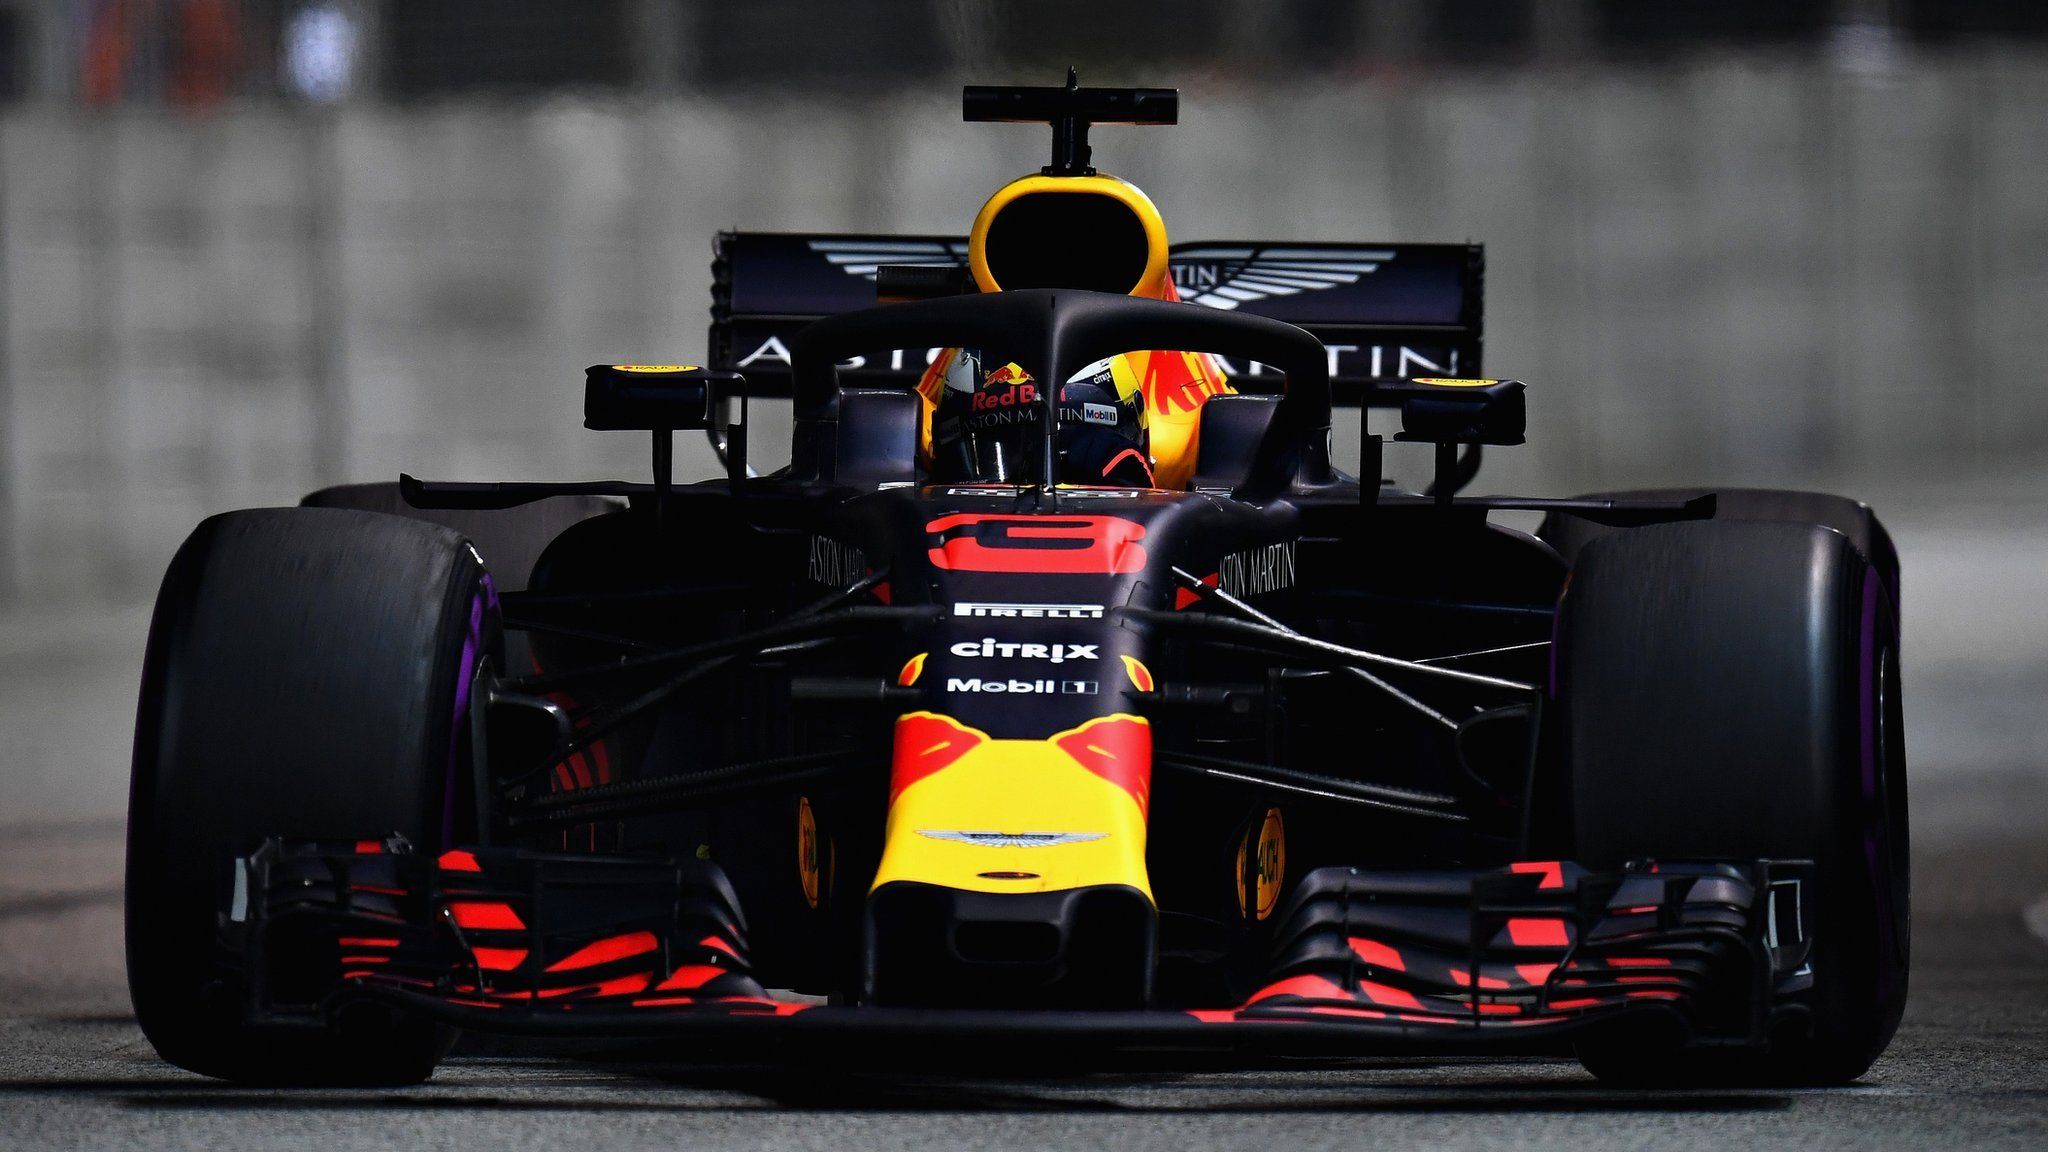 Daniel Ricciardo at the Singapore Grand Prix